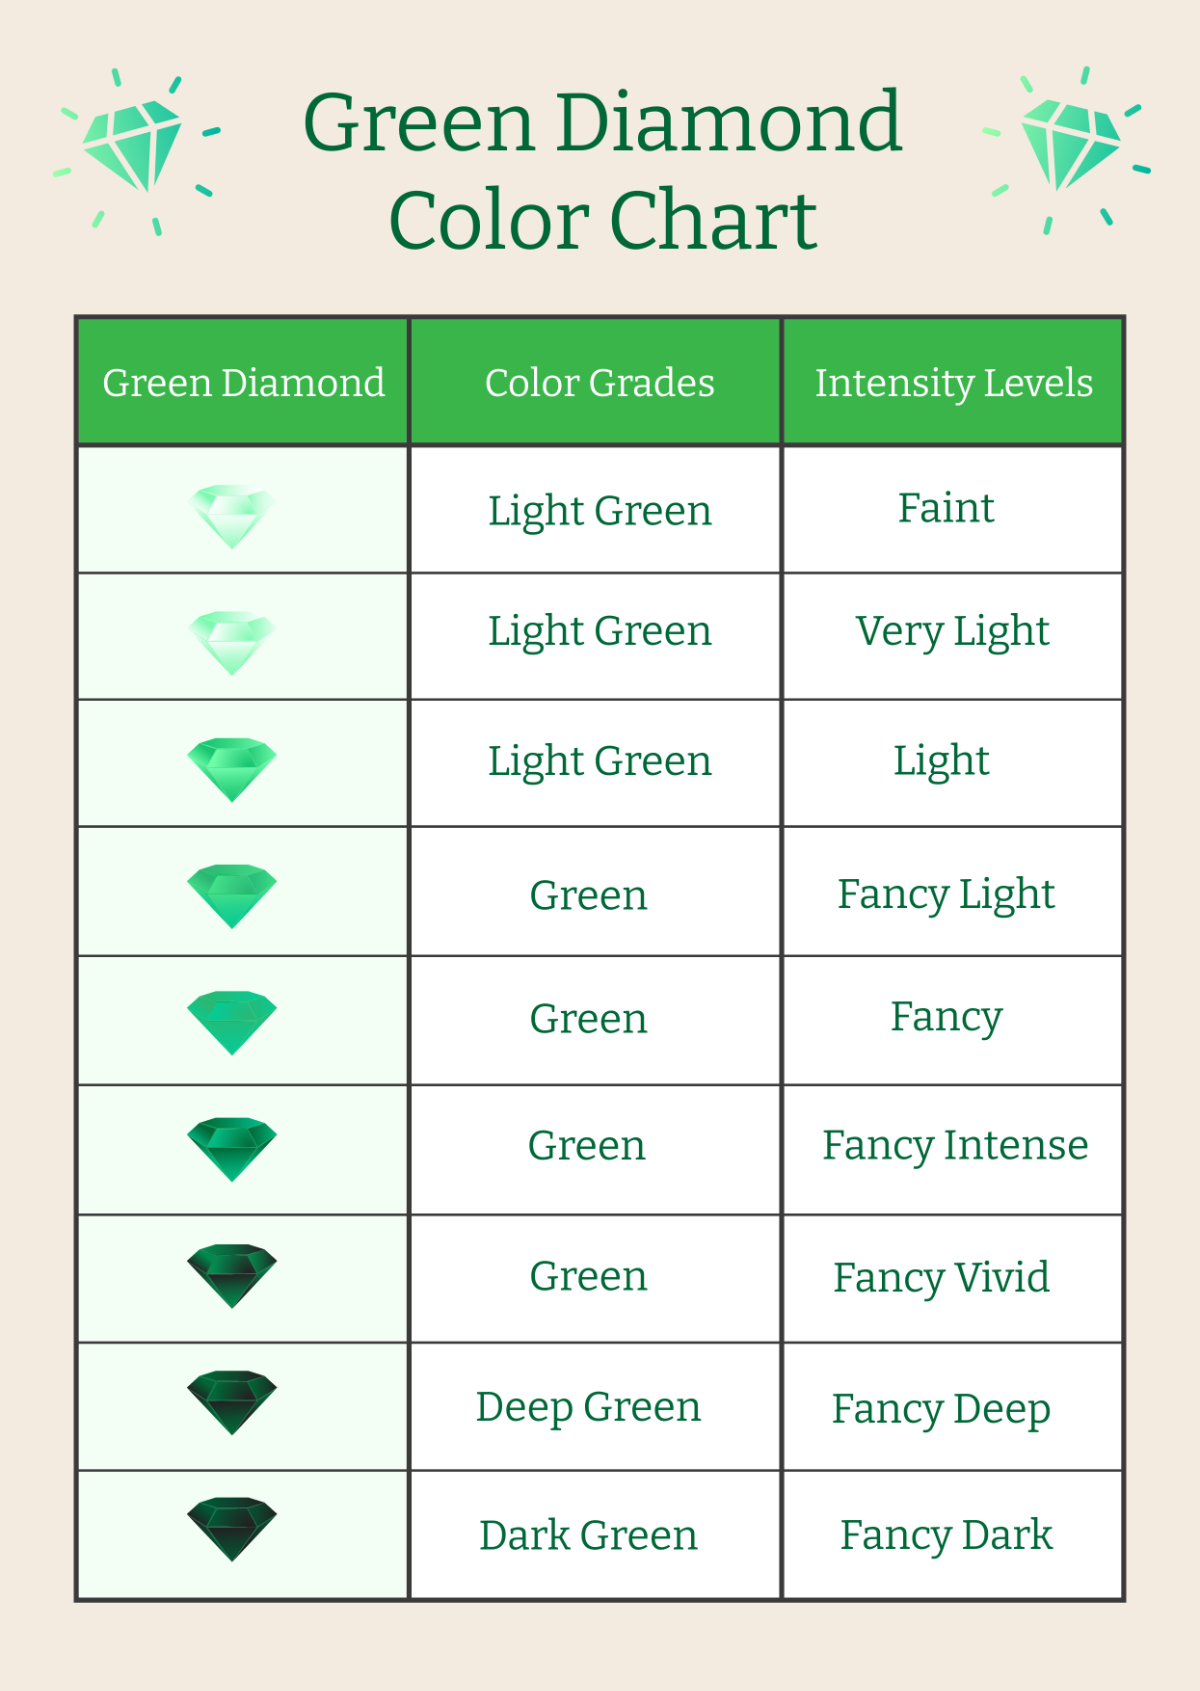 Green Diamond Color Chart